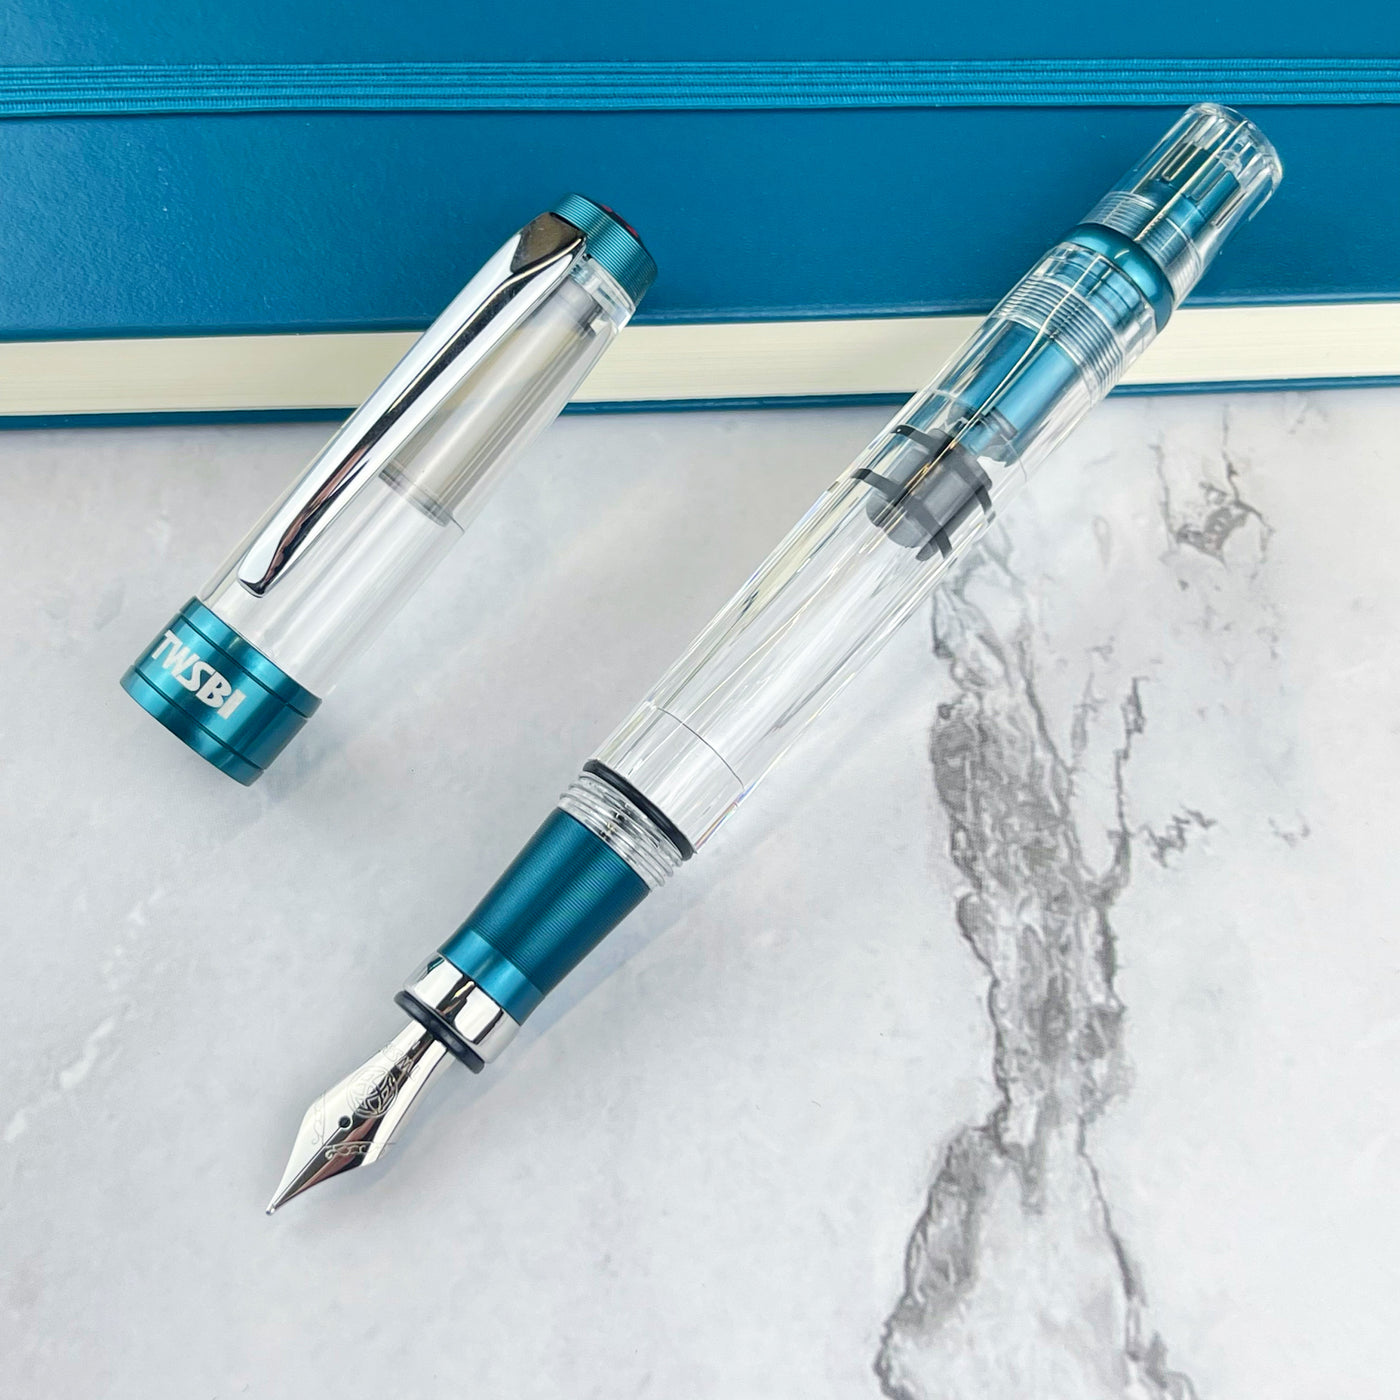 TWSBI Diamond 580ALR Fountain Pen - Prussian Blue